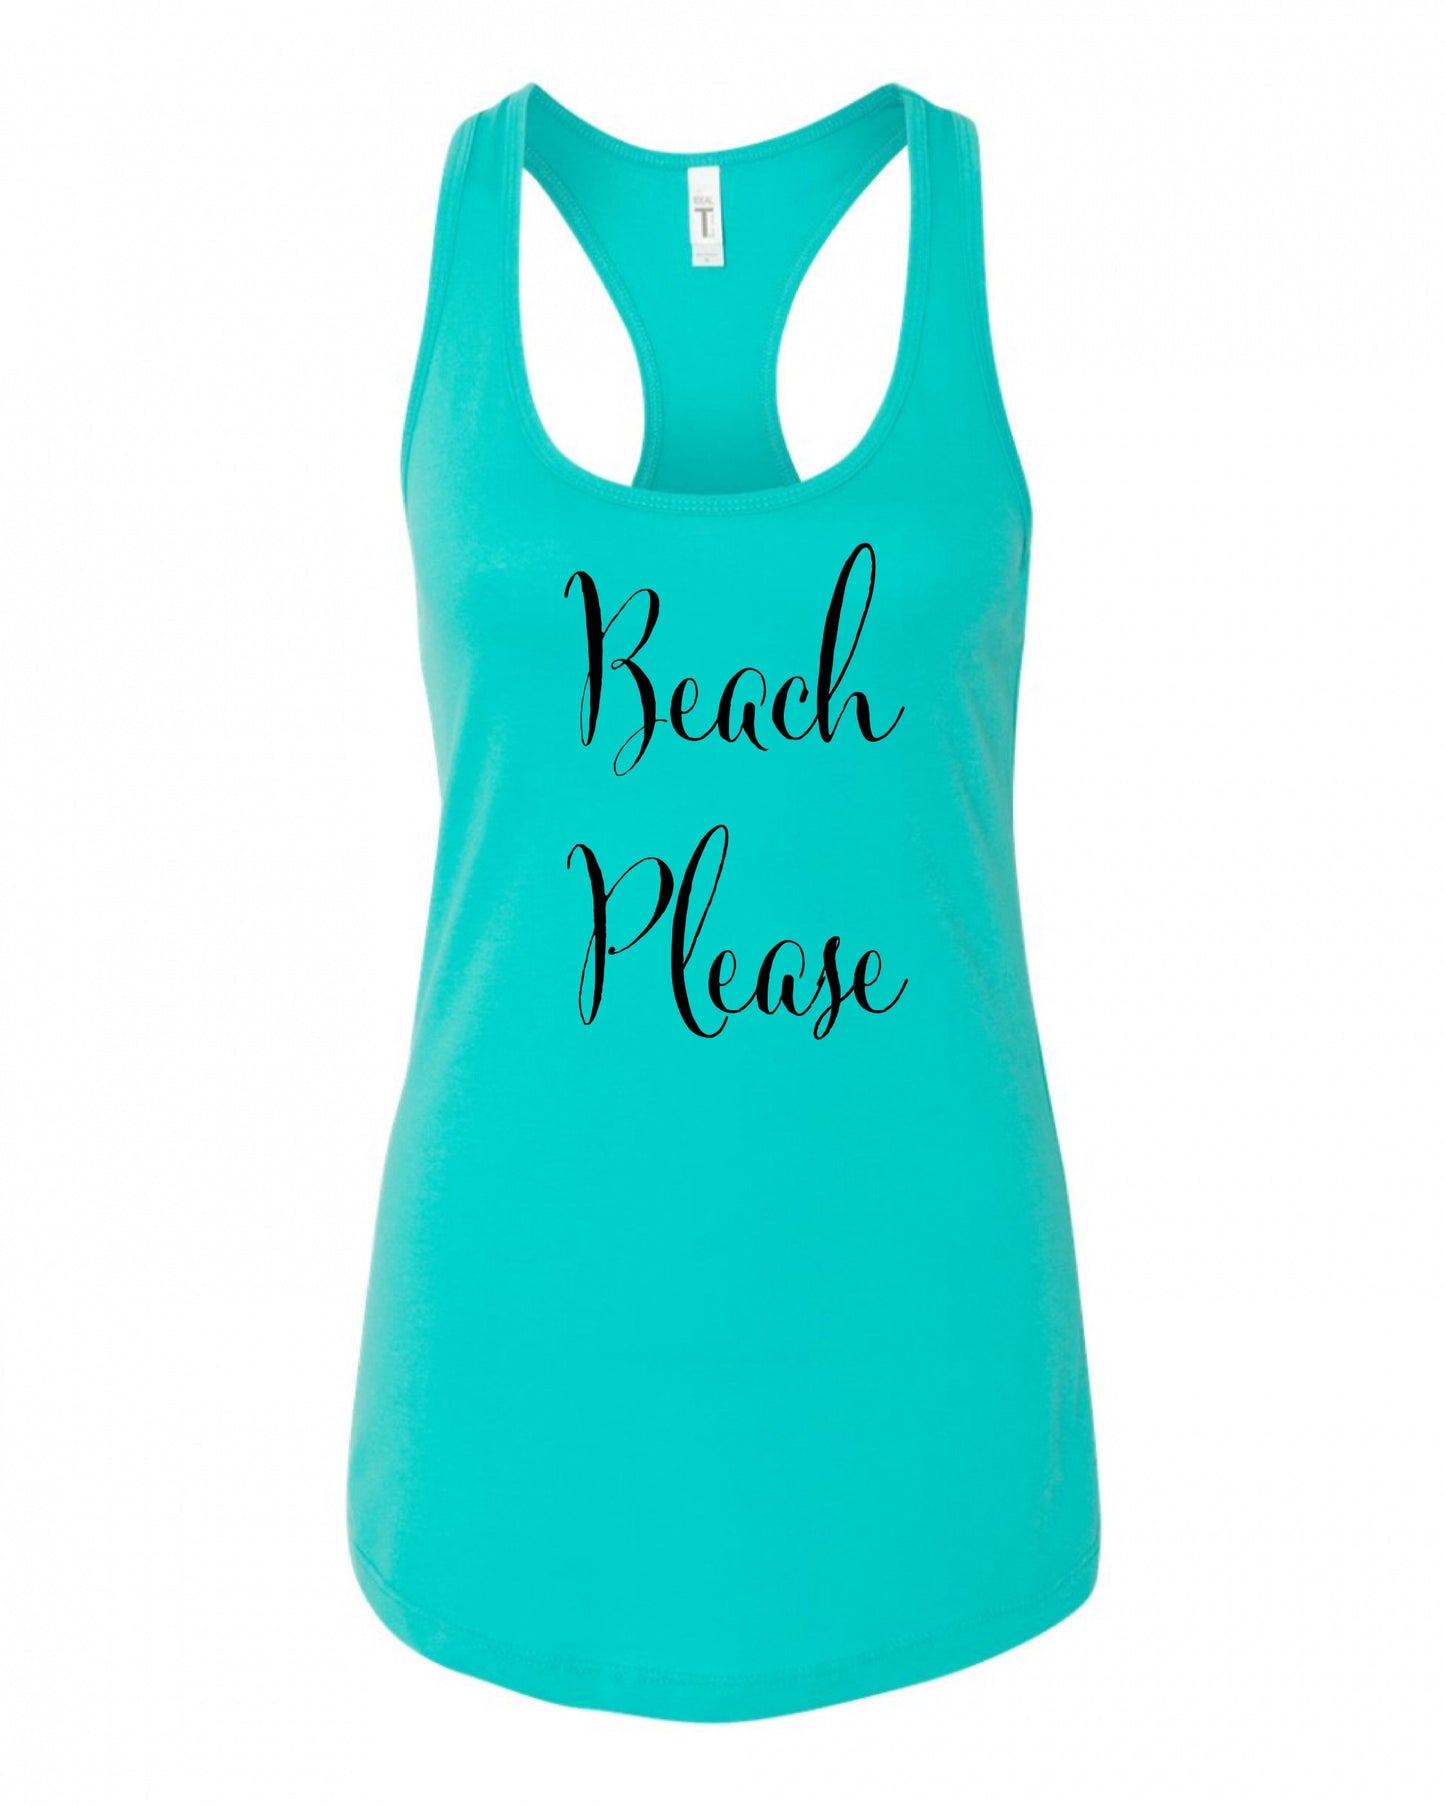 Beach Please shirt, beach mom, beach day shirt, vacation shirt, beach vacation shirt, mermaid shirt, gift for her, gifts holiday